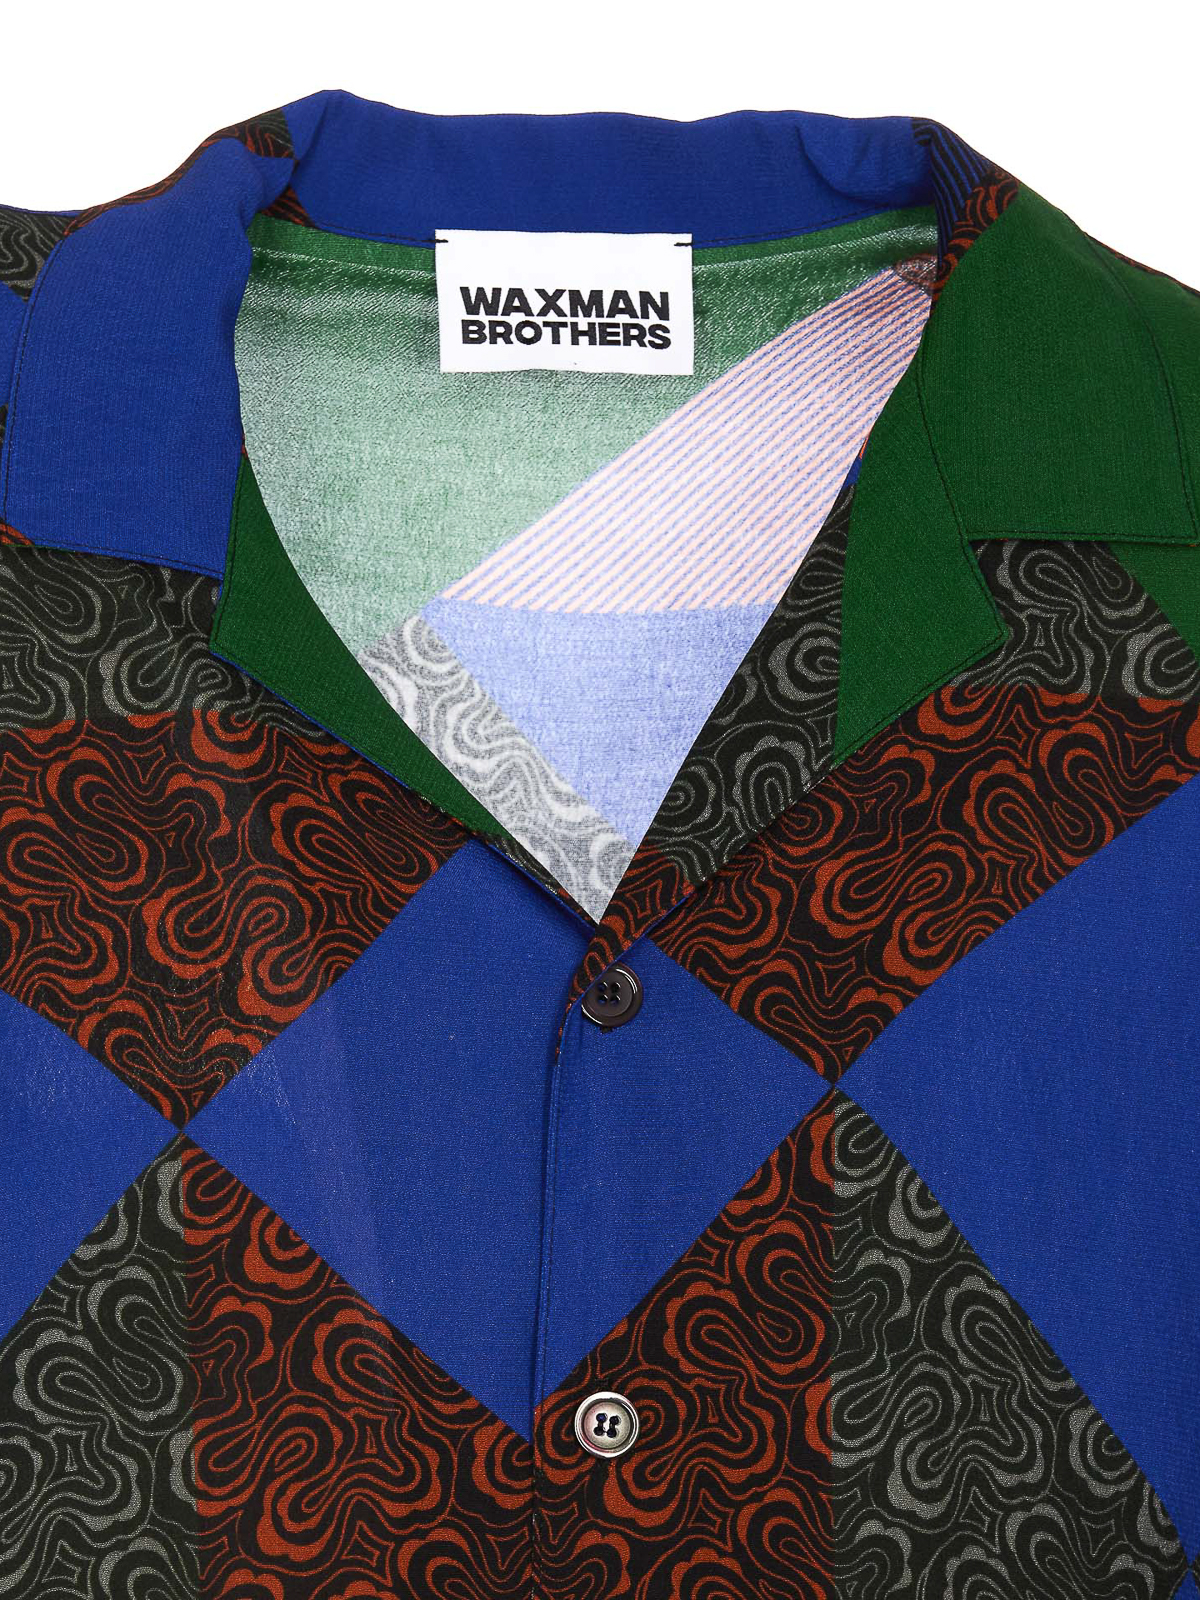 Shirts Waxman Brothers - Waxman Brother Lyrics Shirt - 5000VI3060